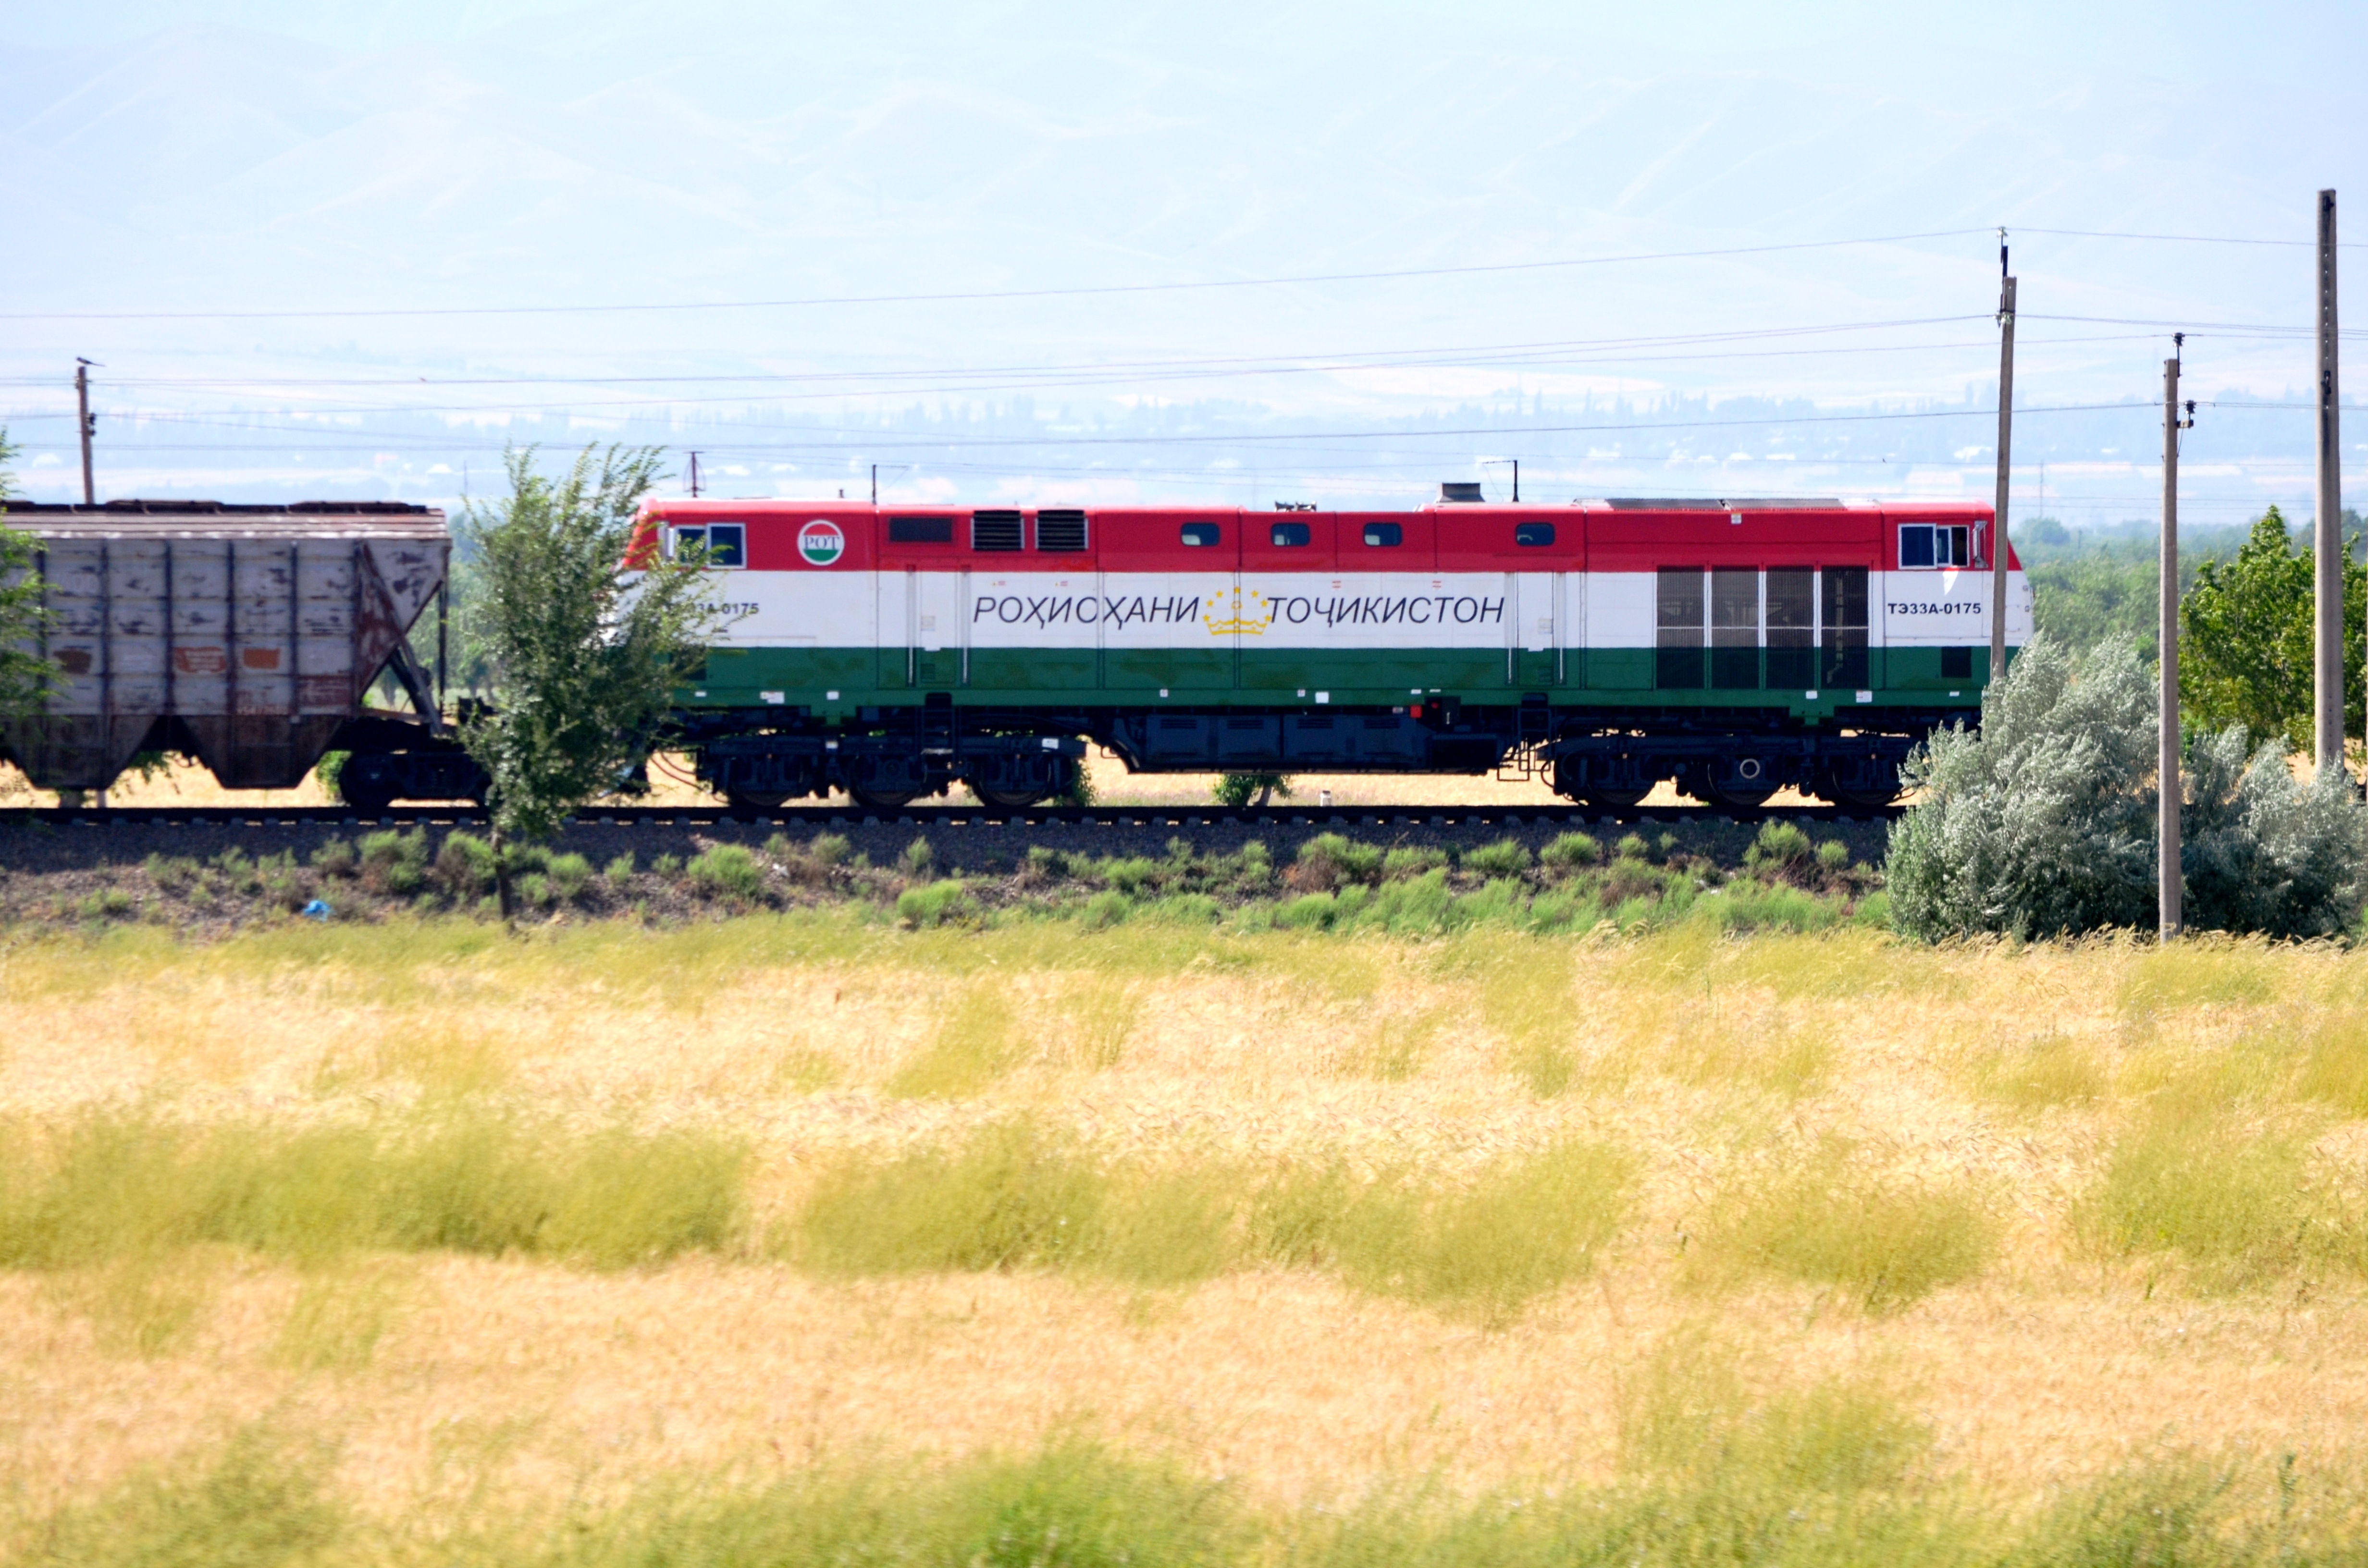 Tajik Railways